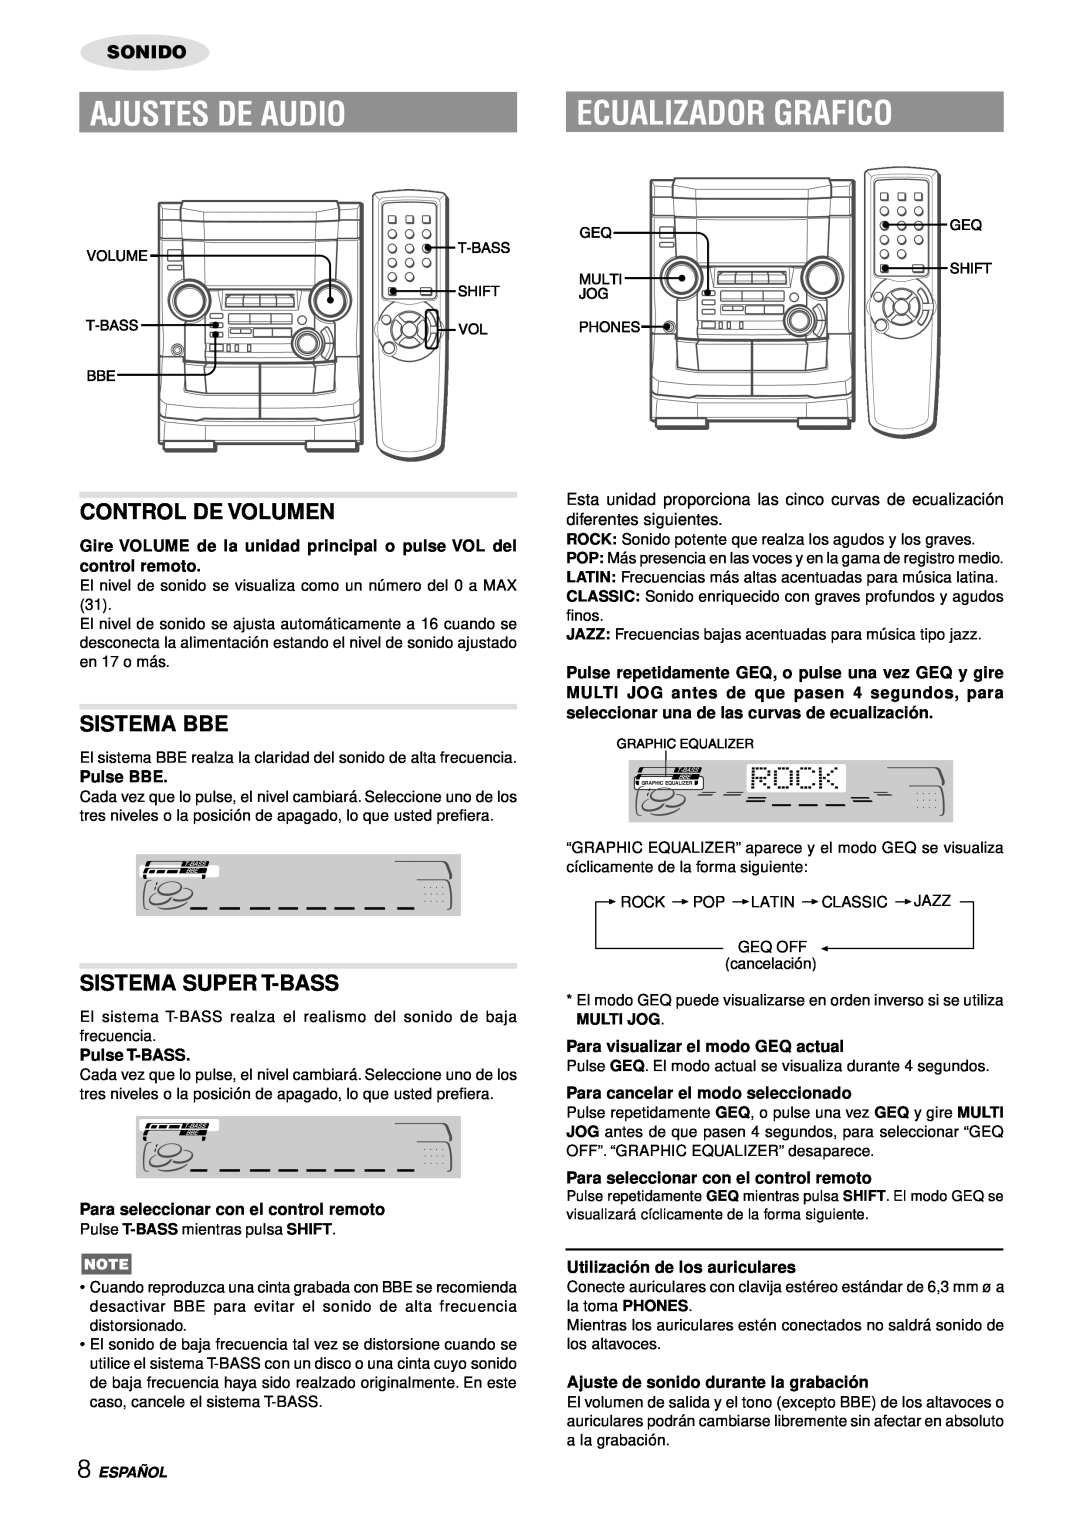 Aiwa NSX-AJ50 Ajustes De Audio, Ecualizador Grafico, Control De Volumen, Sistema Bbe, Sistema Super T-Bass, Sonido 